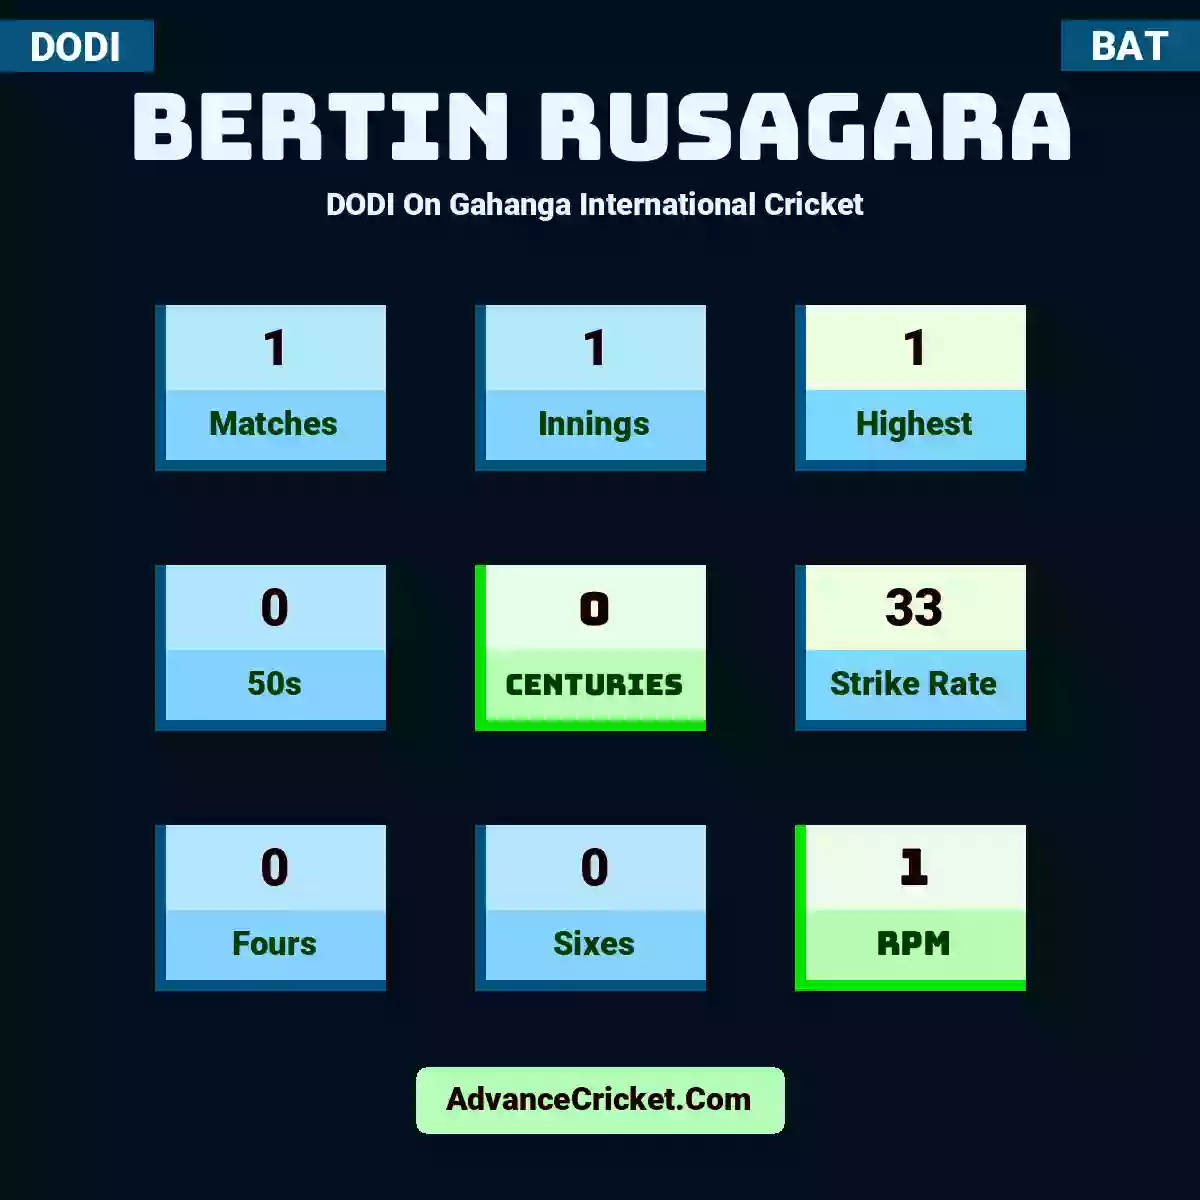 Bertin Rusagara DODI  On Gahanga International Cricket , Bertin Rusagara played 1 matches, scored 1 runs as highest, 0 half-centuries, and 0 centuries, with a strike rate of 33. B.Rusagara hit 0 fours and 0 sixes, with an RPM of 1.